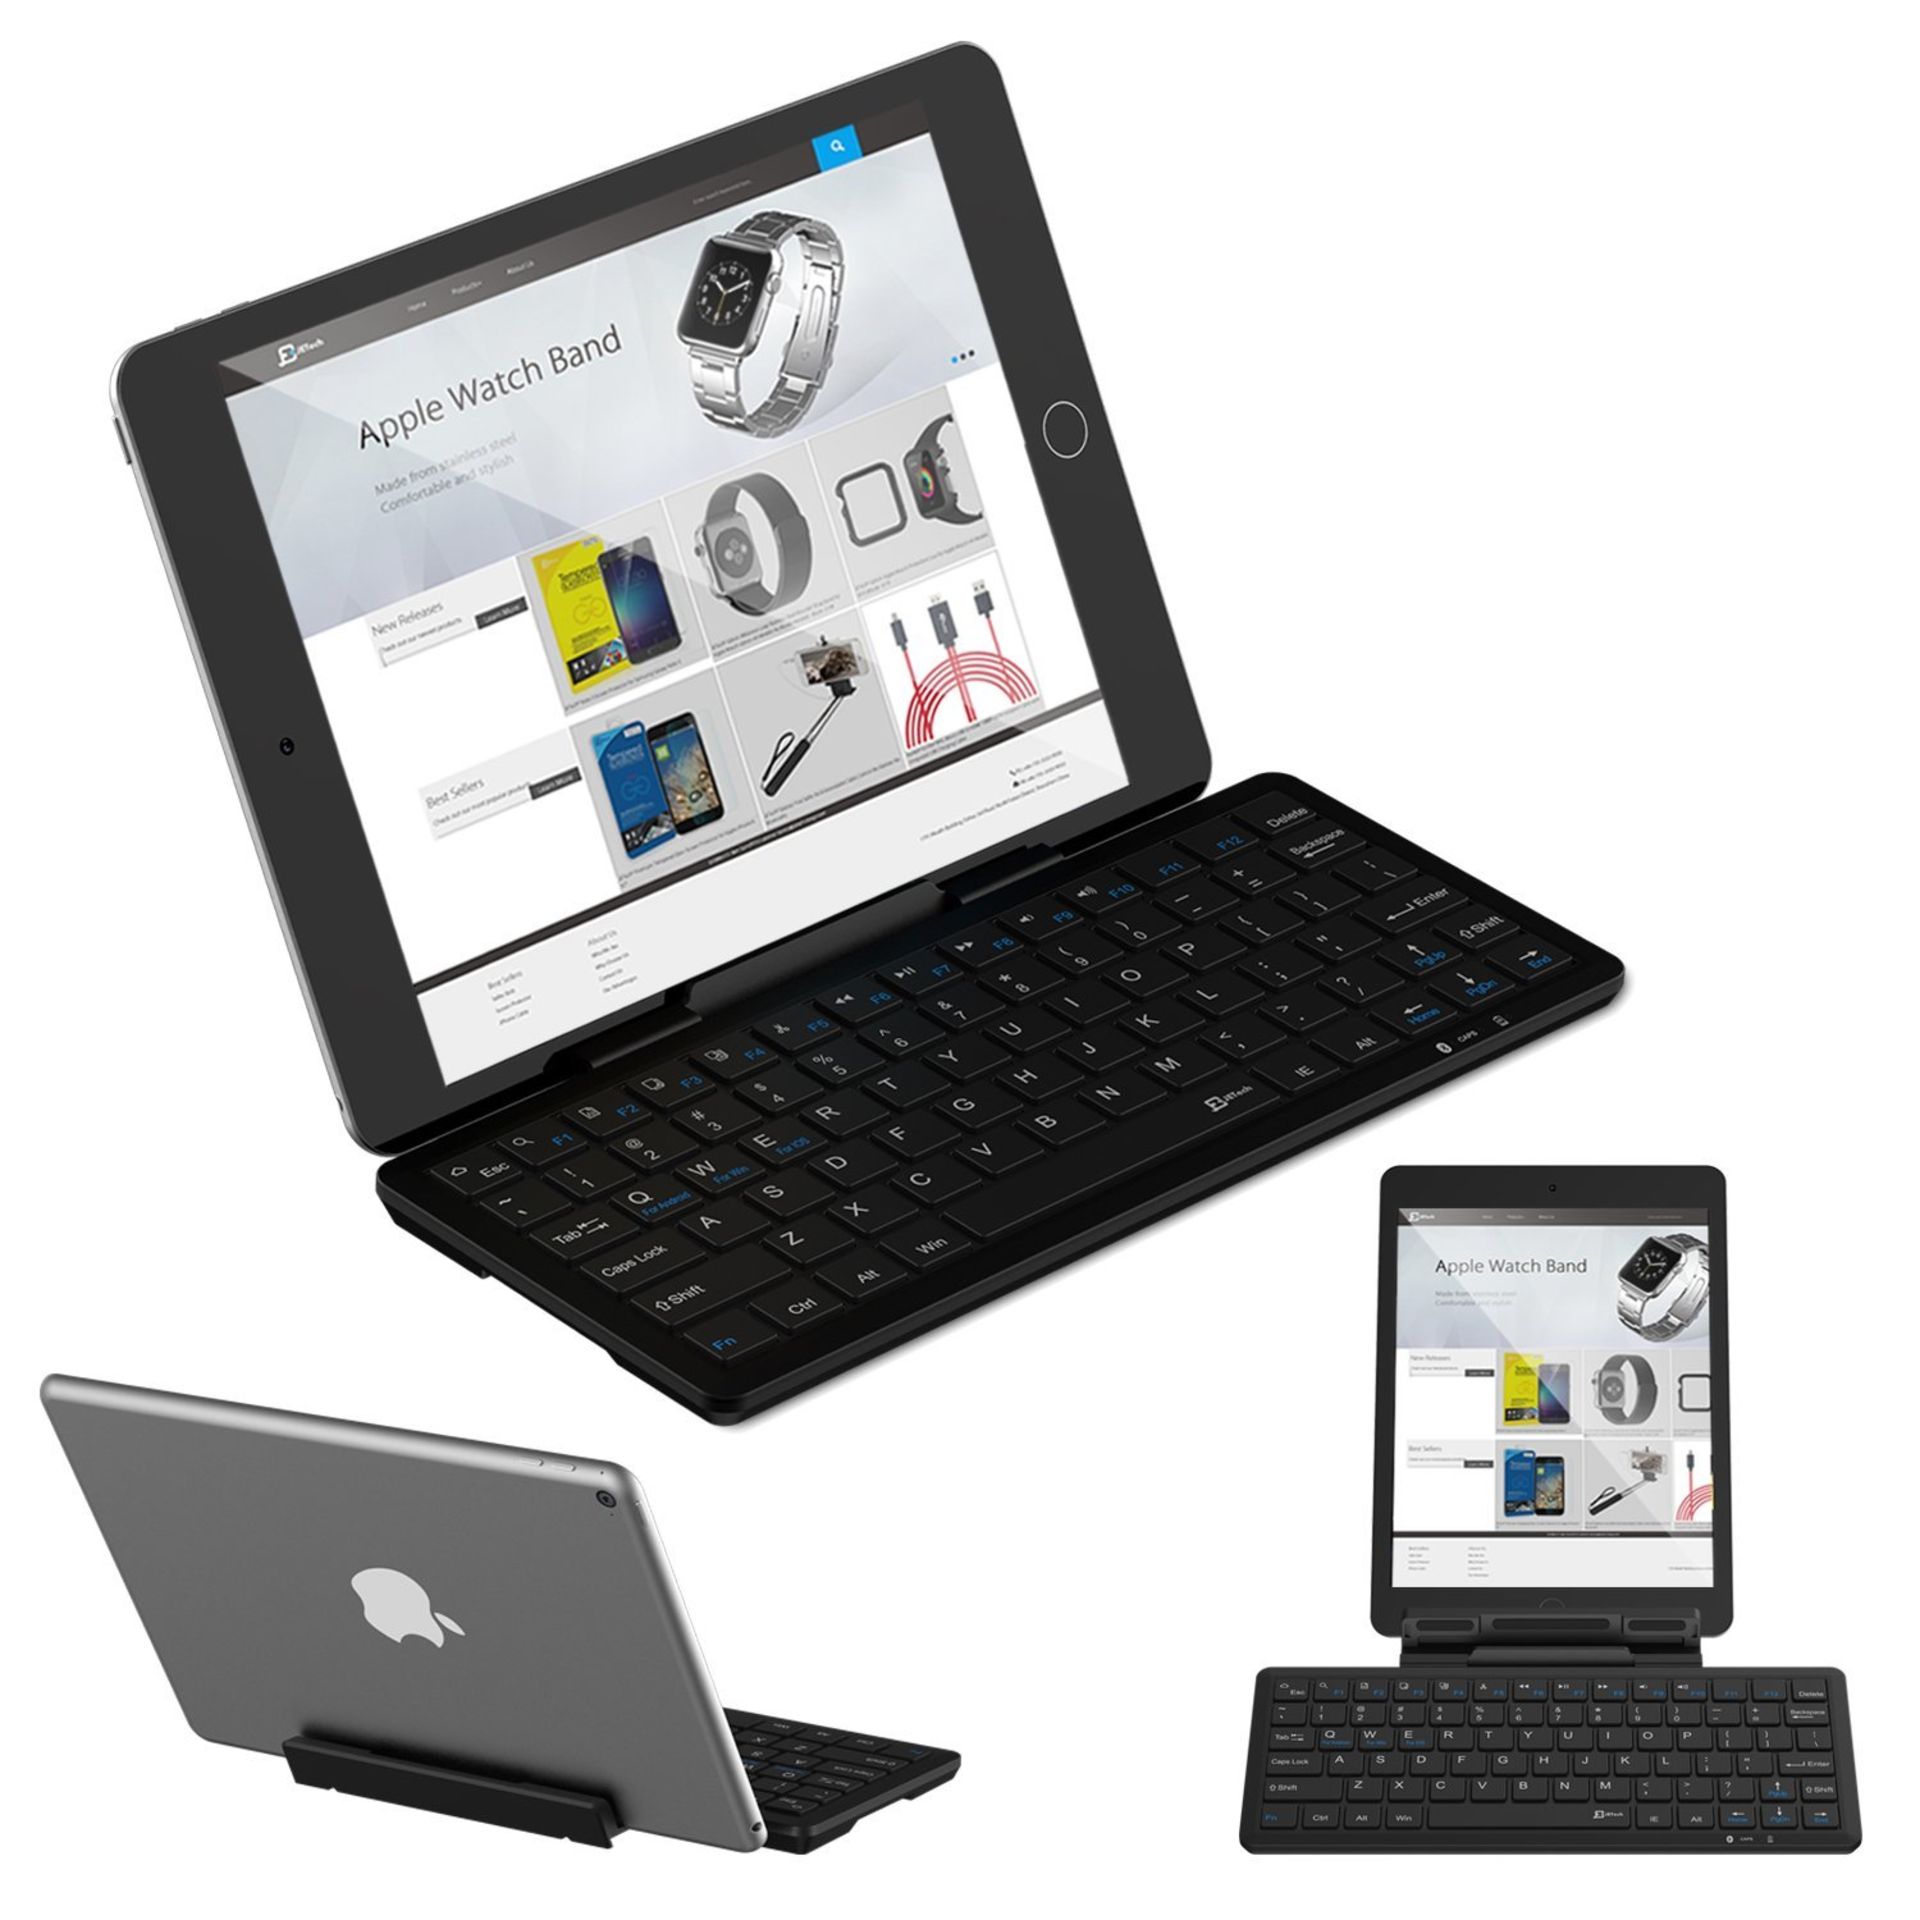 V *TRADE QTY* Brand New Tragbare Universal Bluetooth Keyboard Amazon Price £14.95 X 5 YOUR BID PRICE